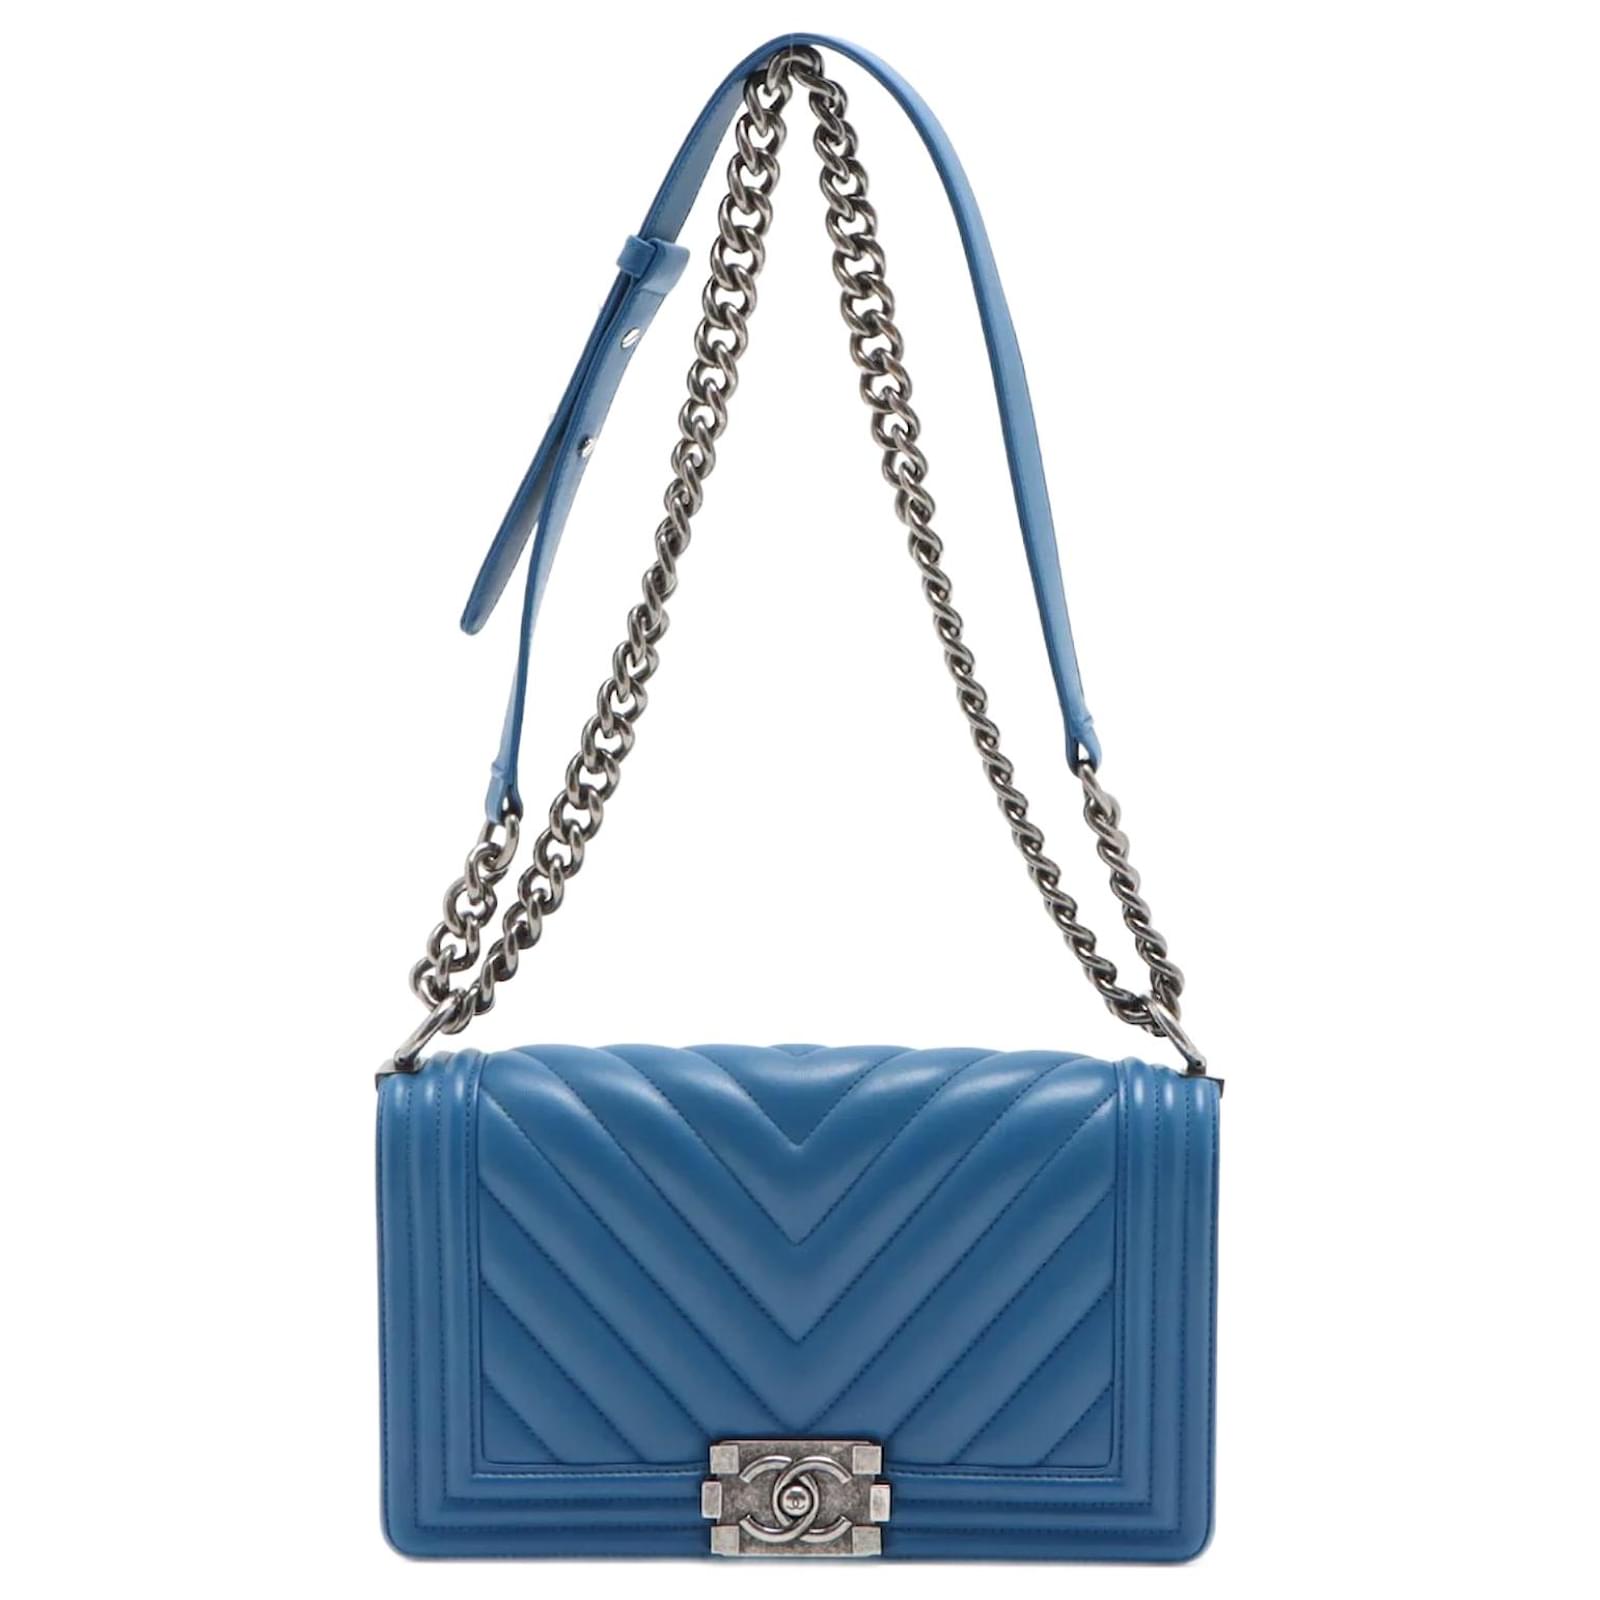 Handbags Chanel Boy Medium Chevron Calf Leather Blue Flap Bag